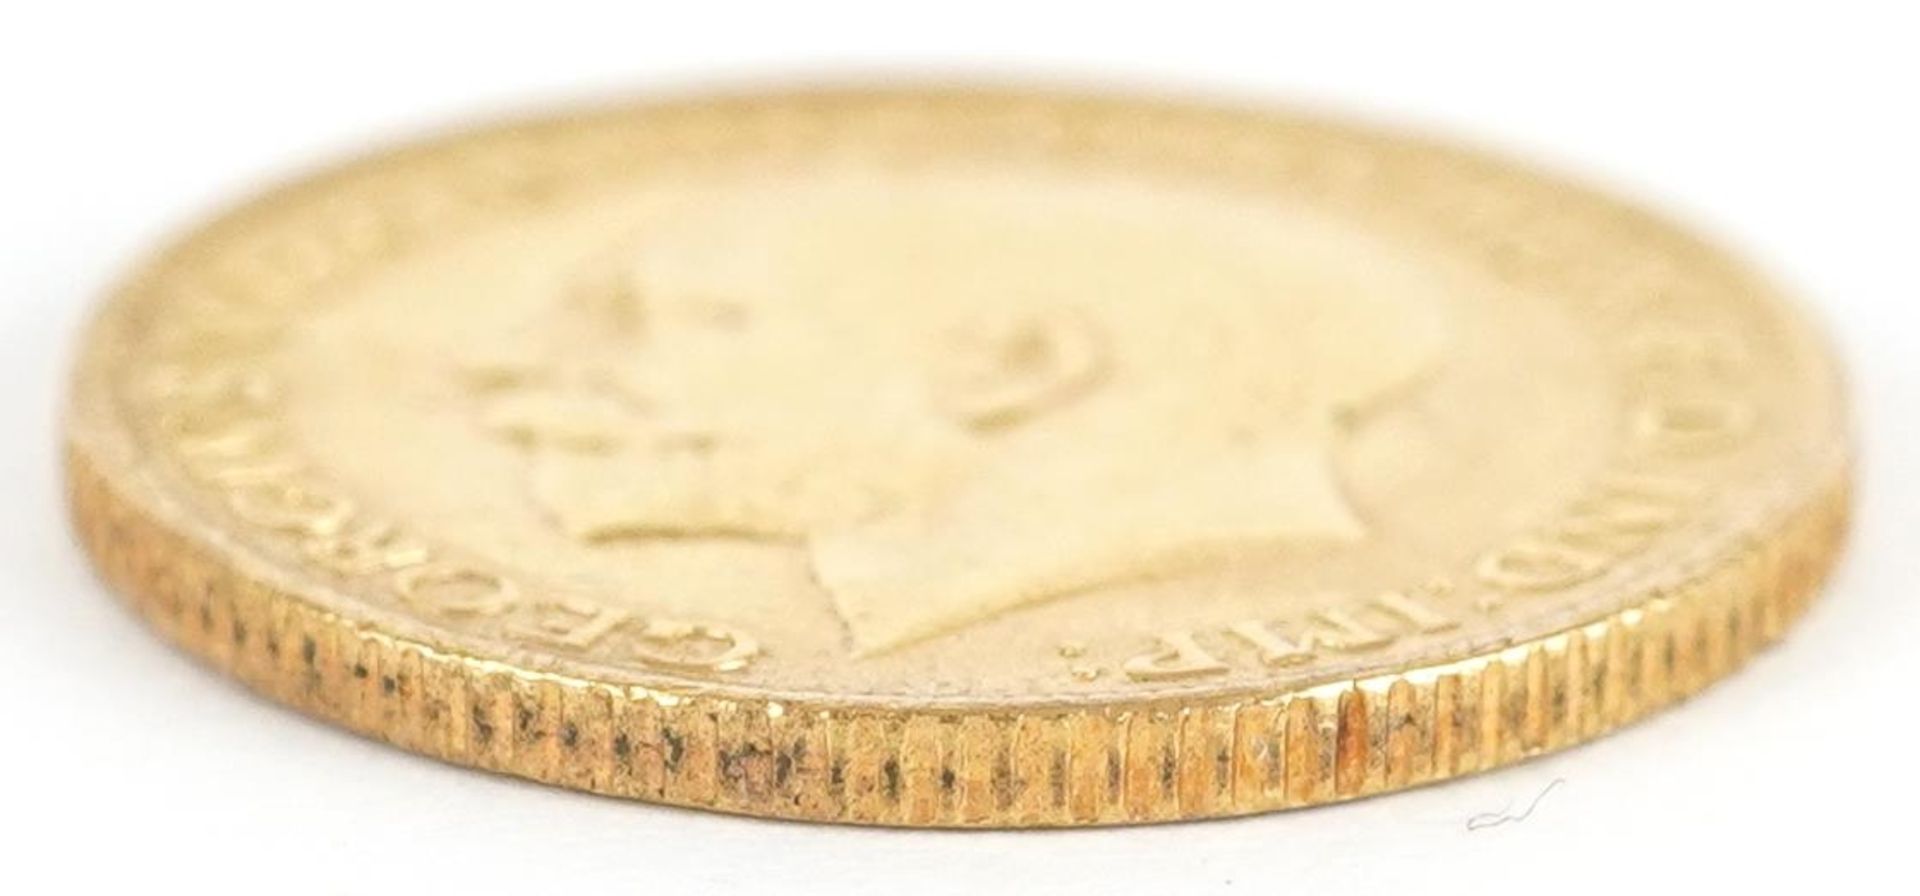 George V 1915 gold sovereign - Image 3 of 3